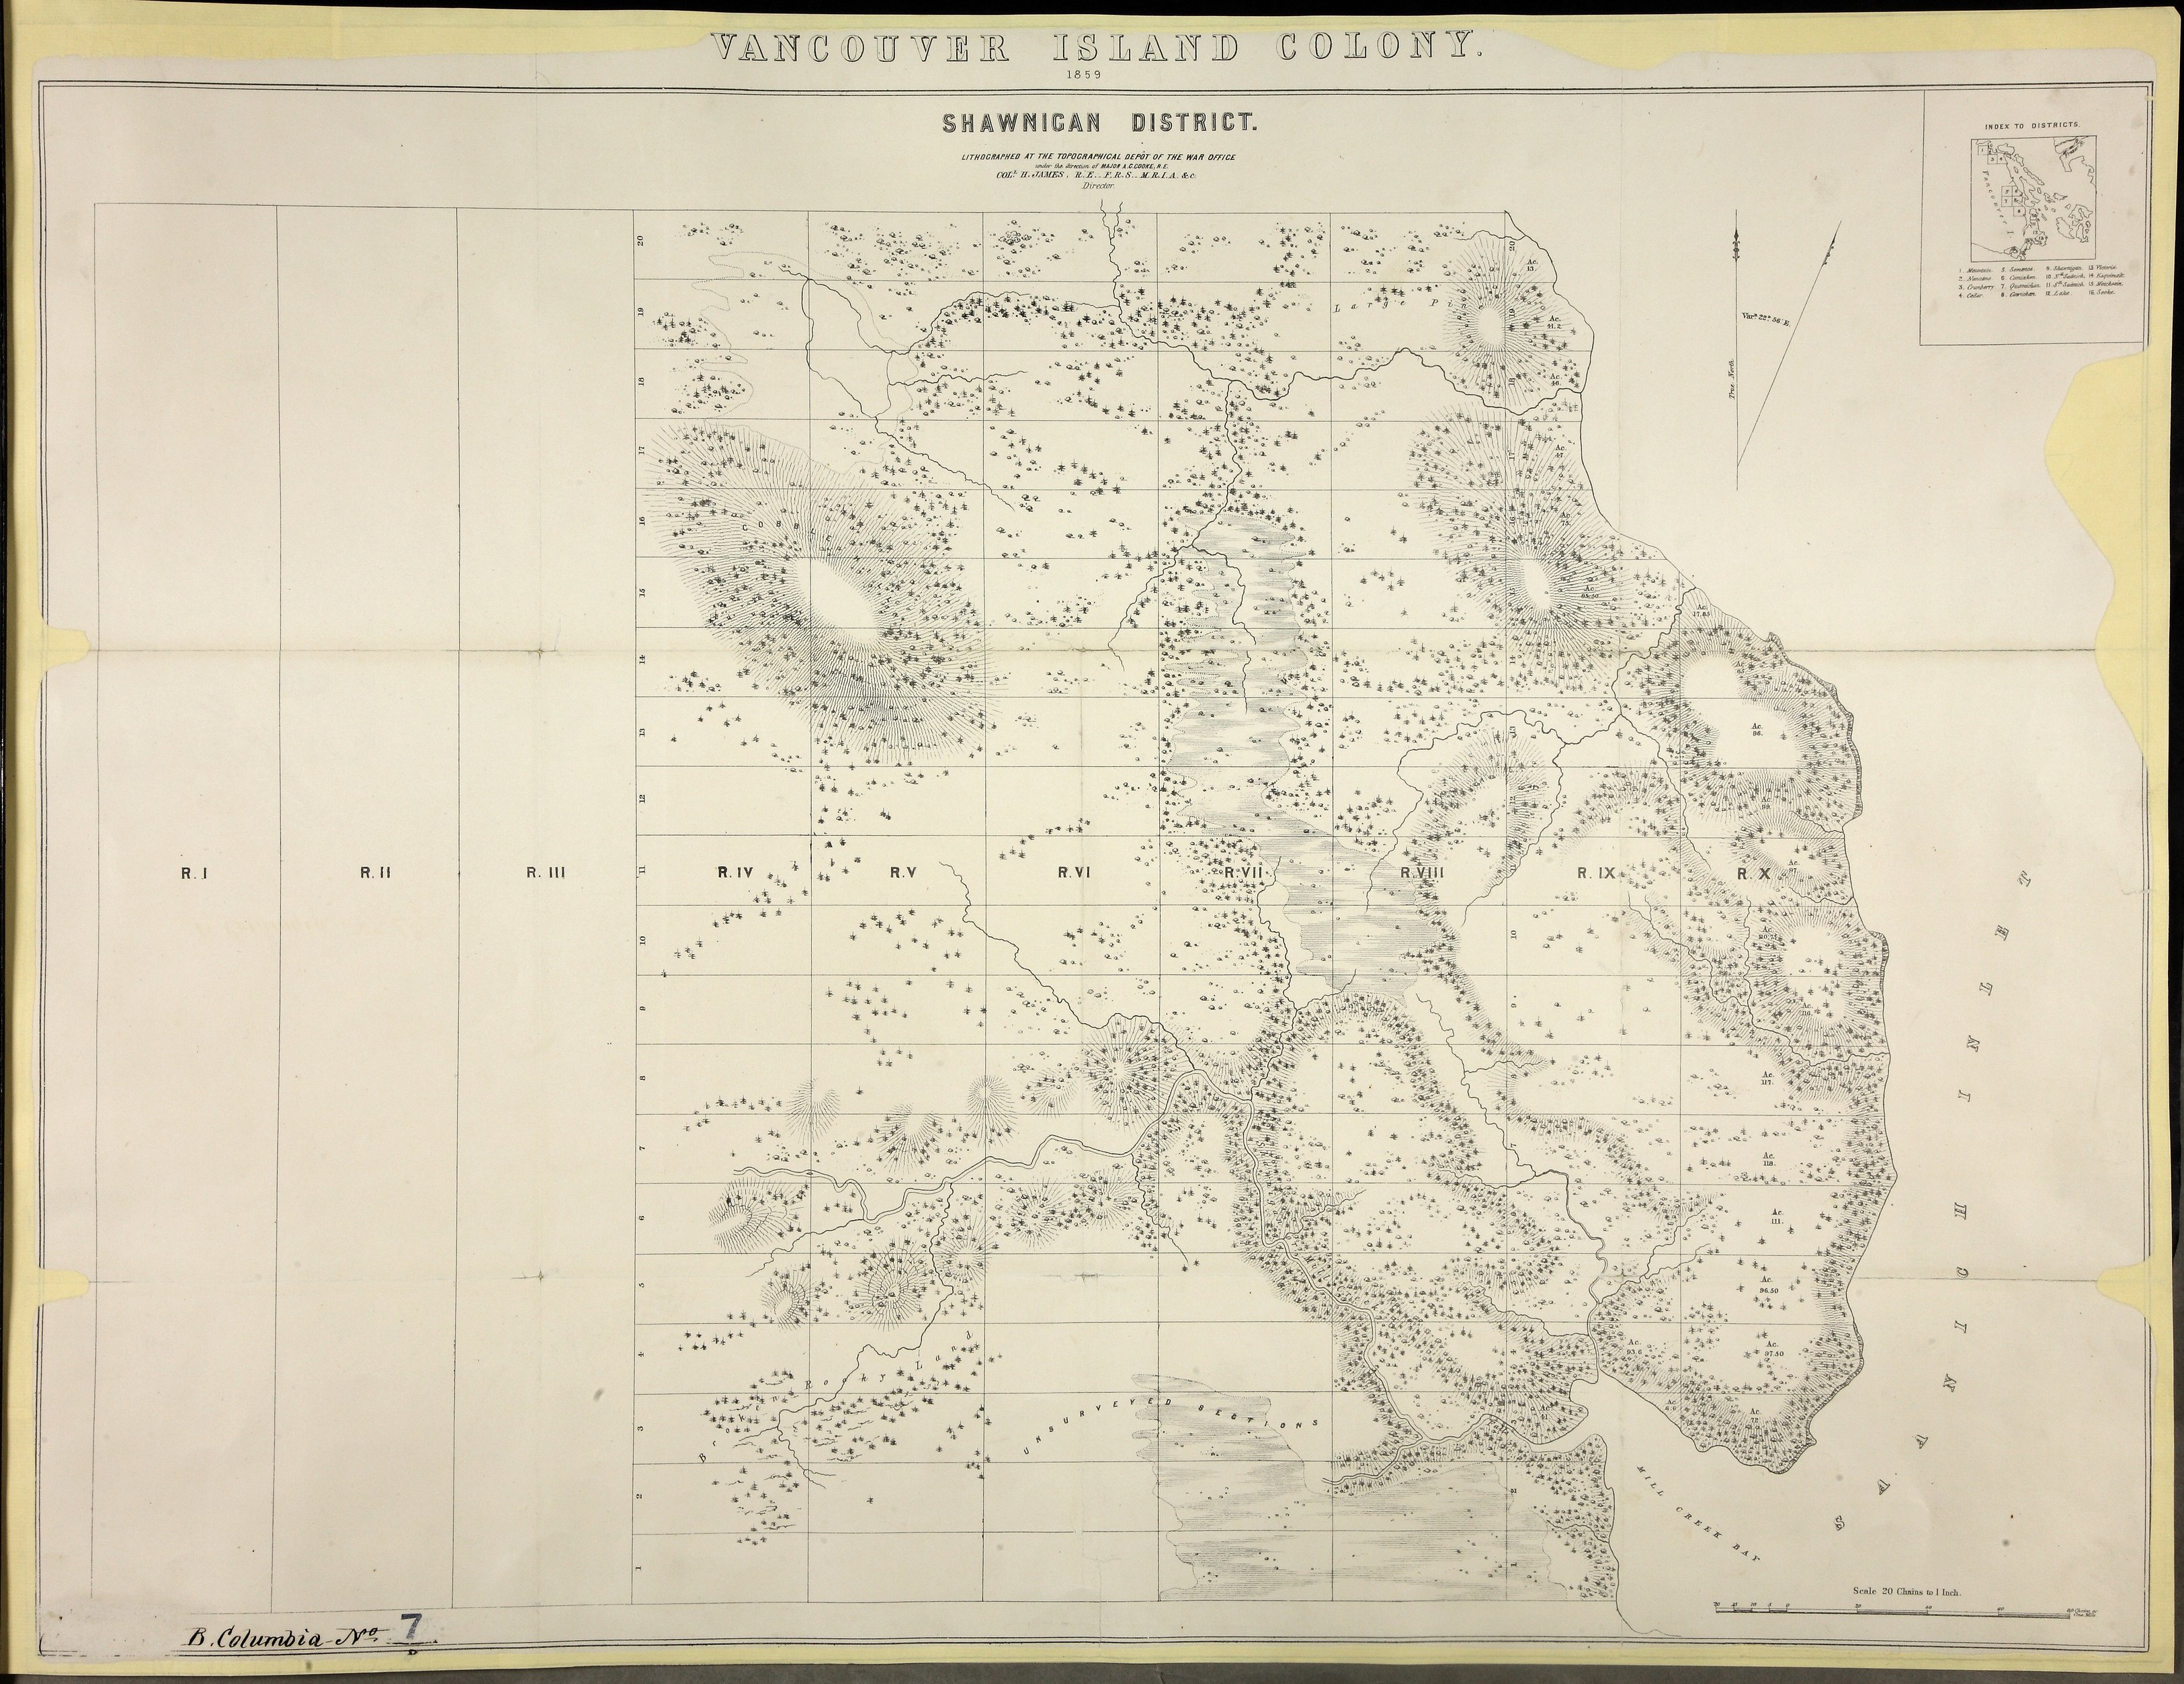 Shawnigan District 1859.